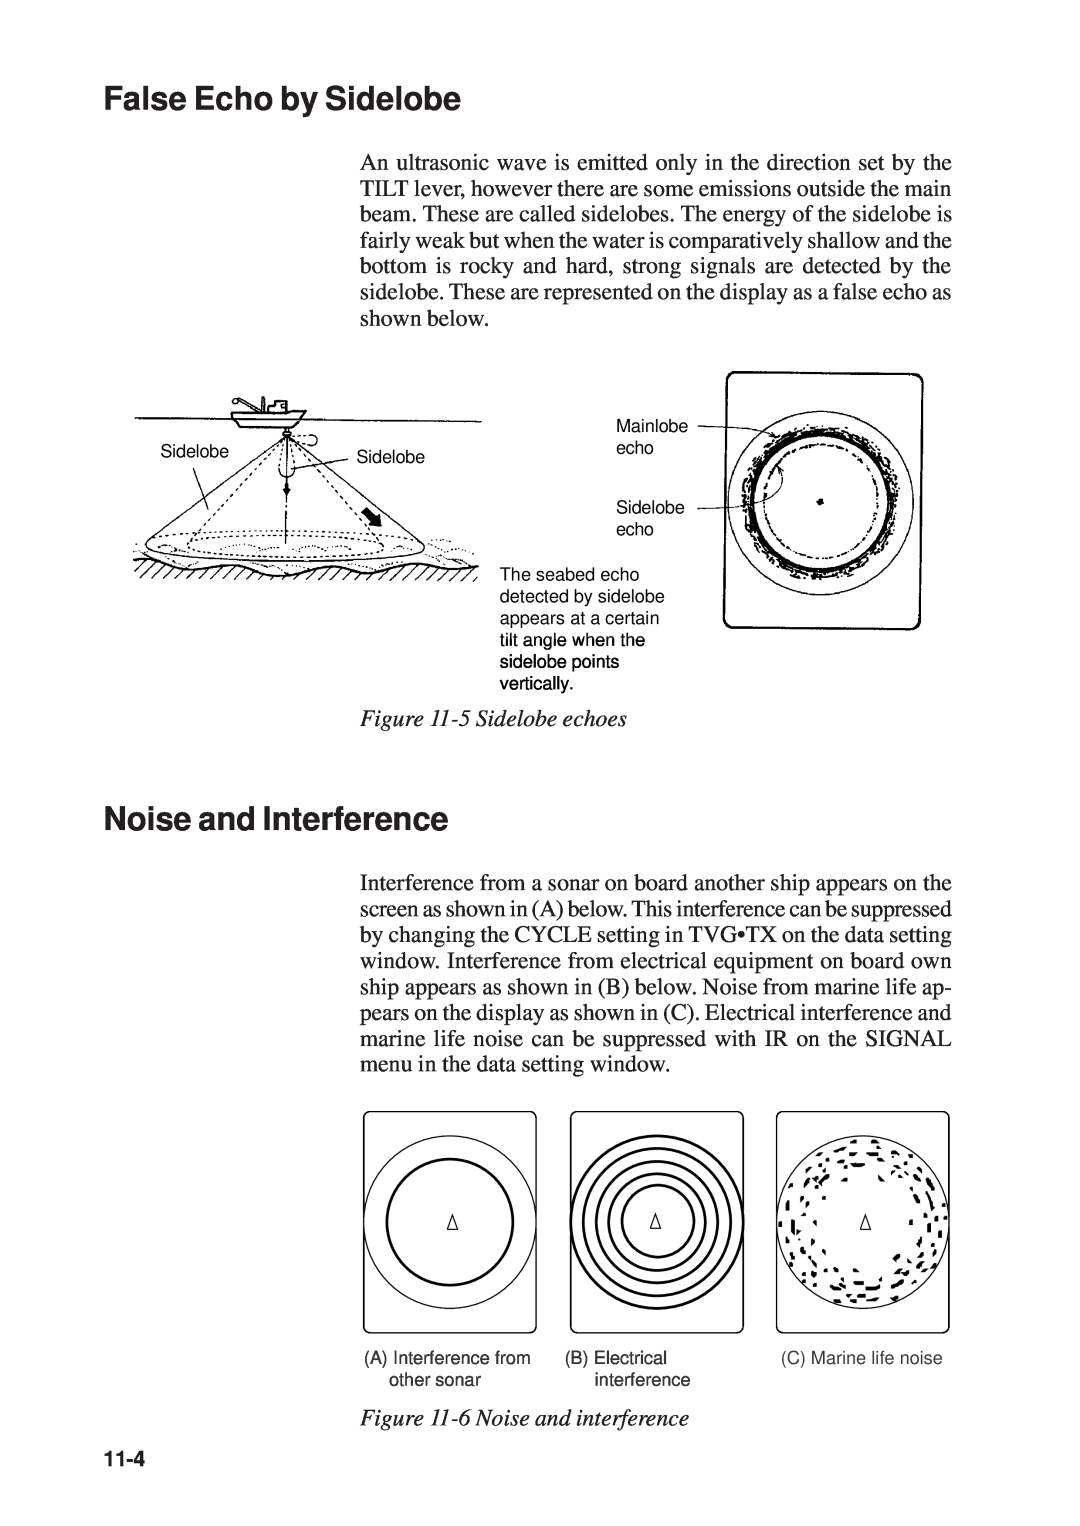 Furuno CSH-53 manual False Echo by Sidelobe, Noise and Interference, 5 Sidelobe echoes, 6 Noise and interference 